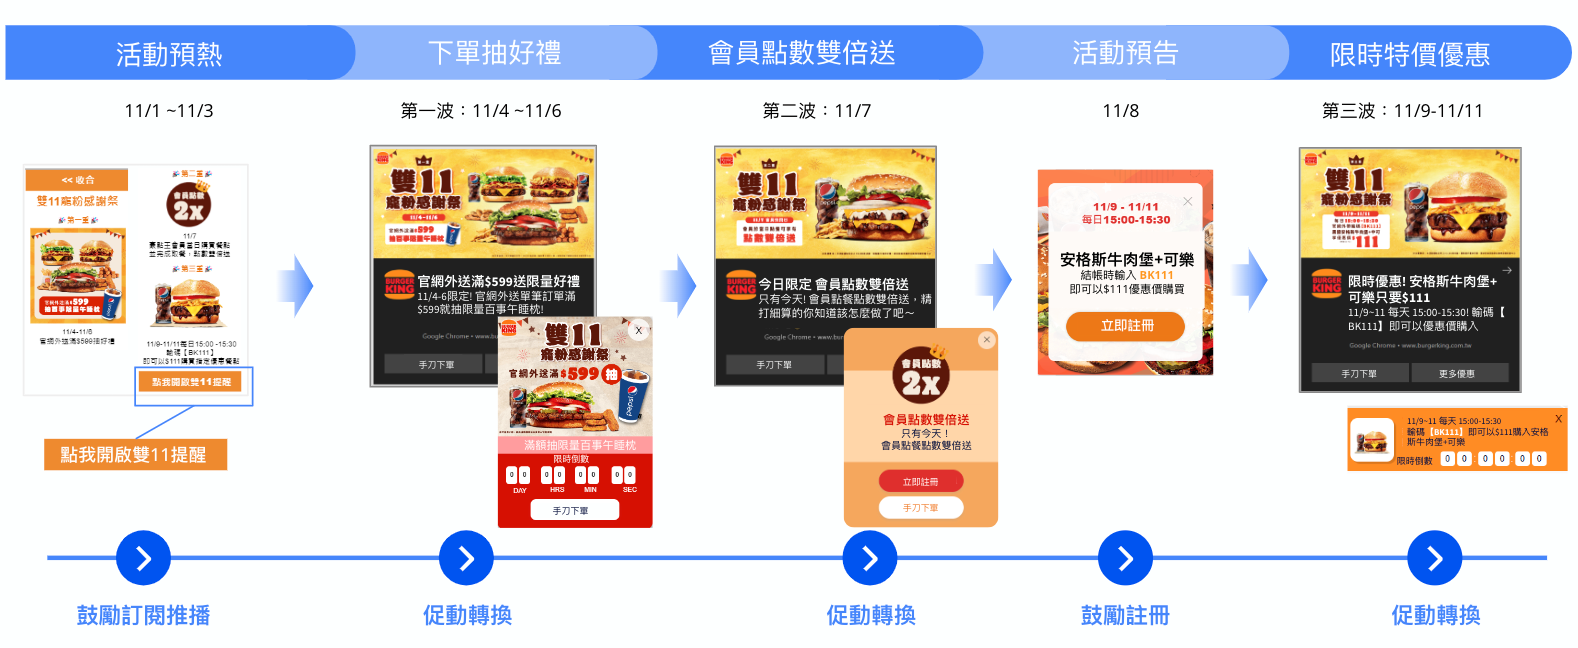 Burger King_一站式自動化溝通,實現節慶檔期多波段行銷互動